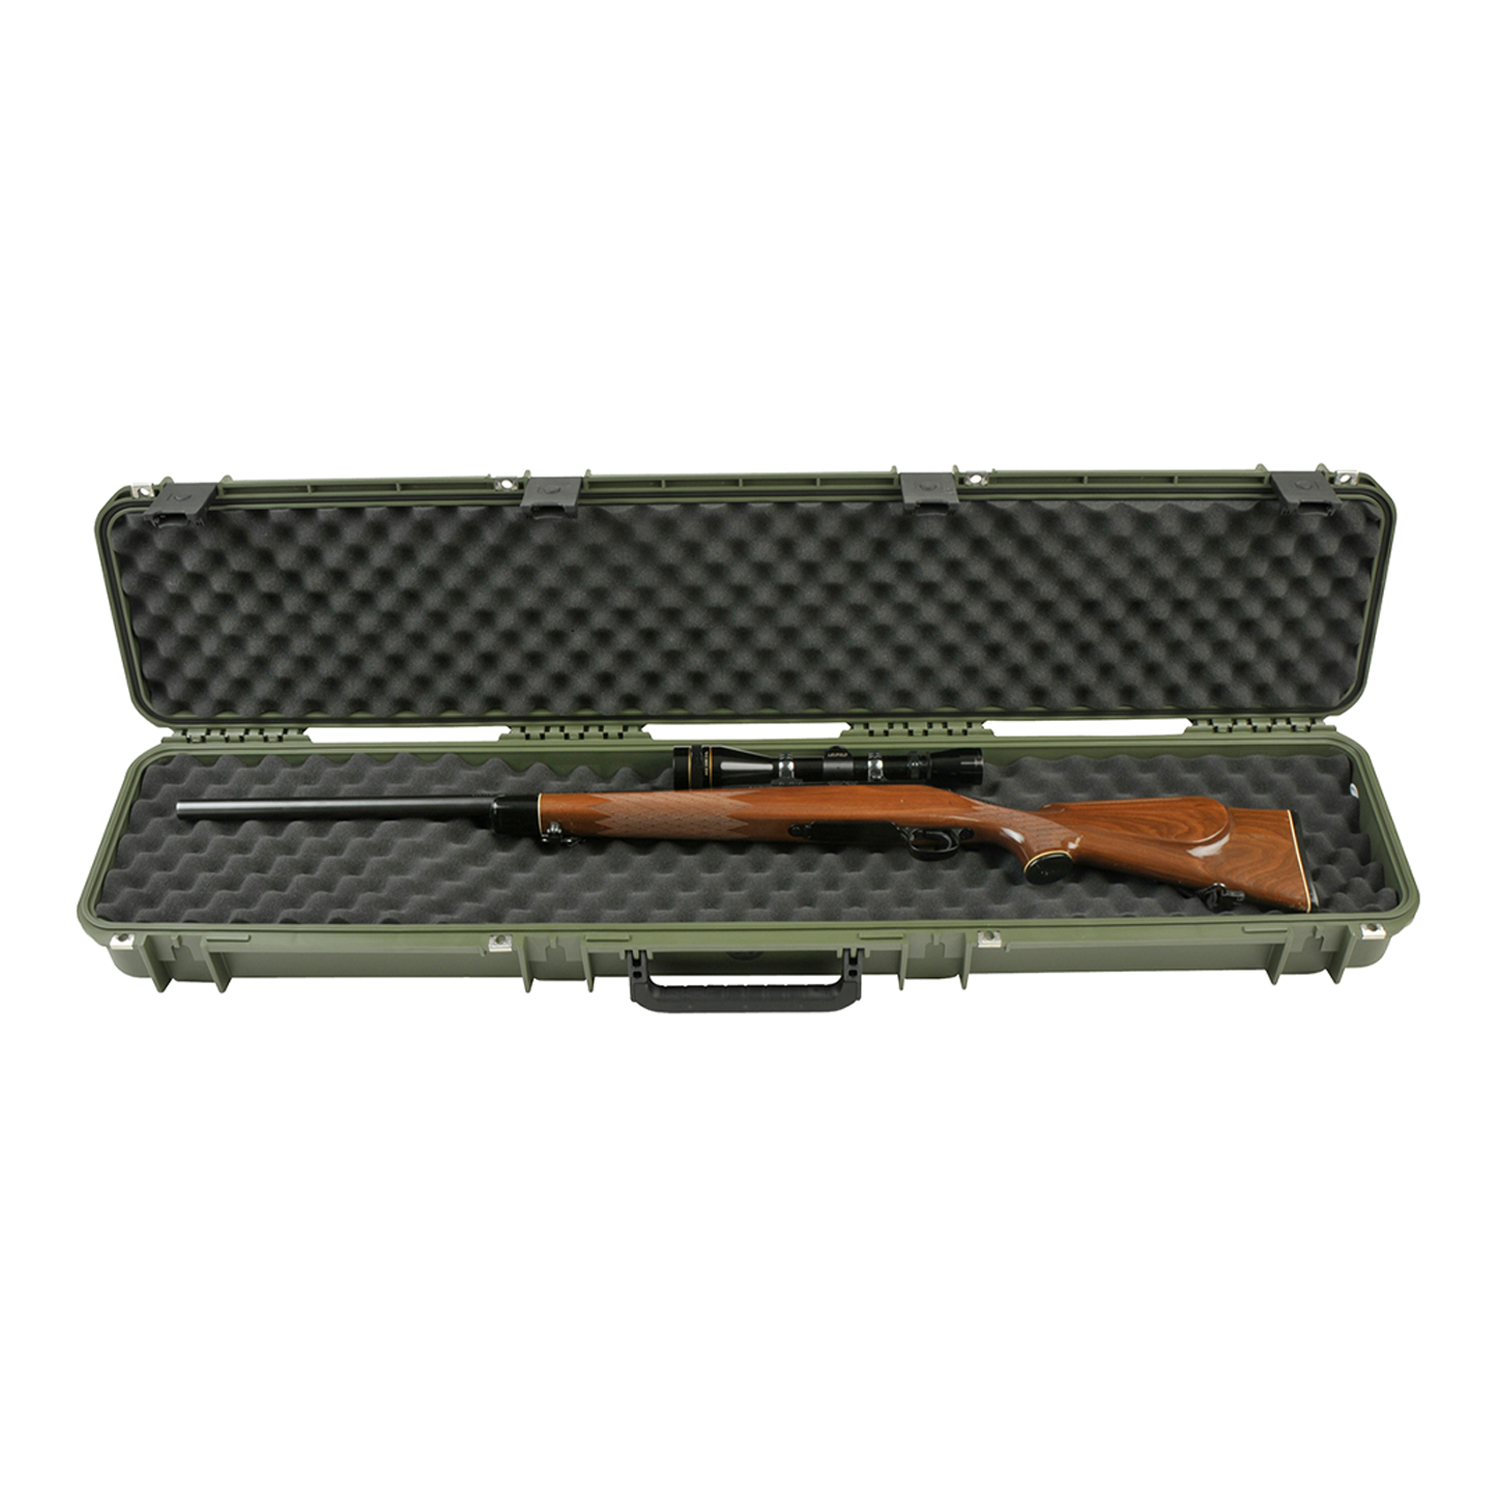 Hard single rifle case